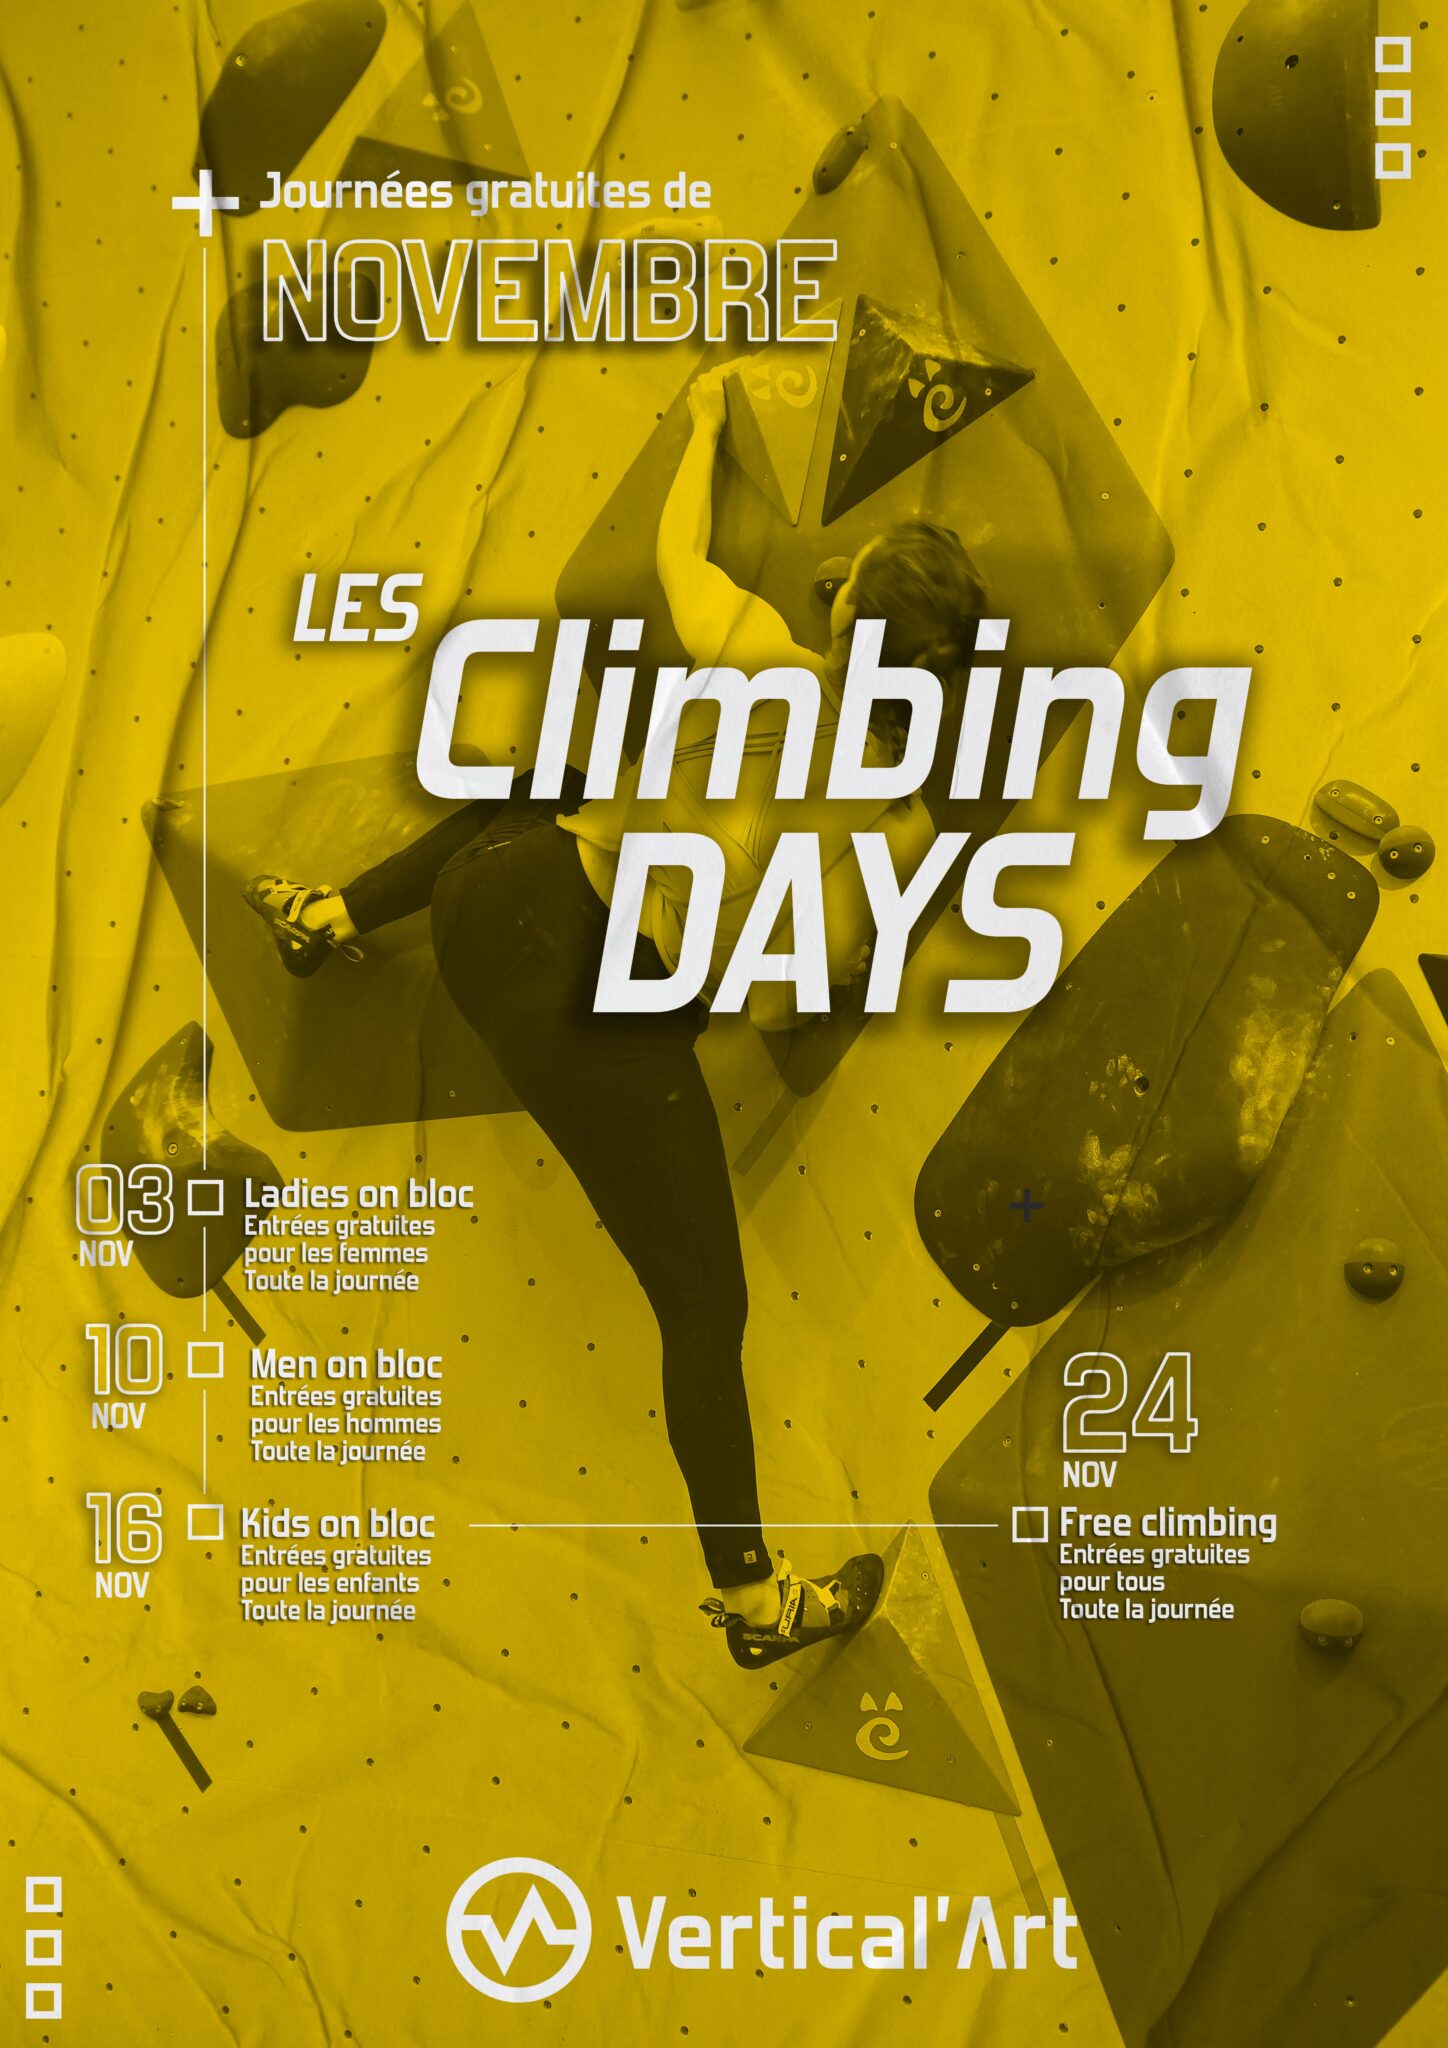 Climbing days à Vertical'Art Saint-Quentin-en-Yvelines Novembre 2022